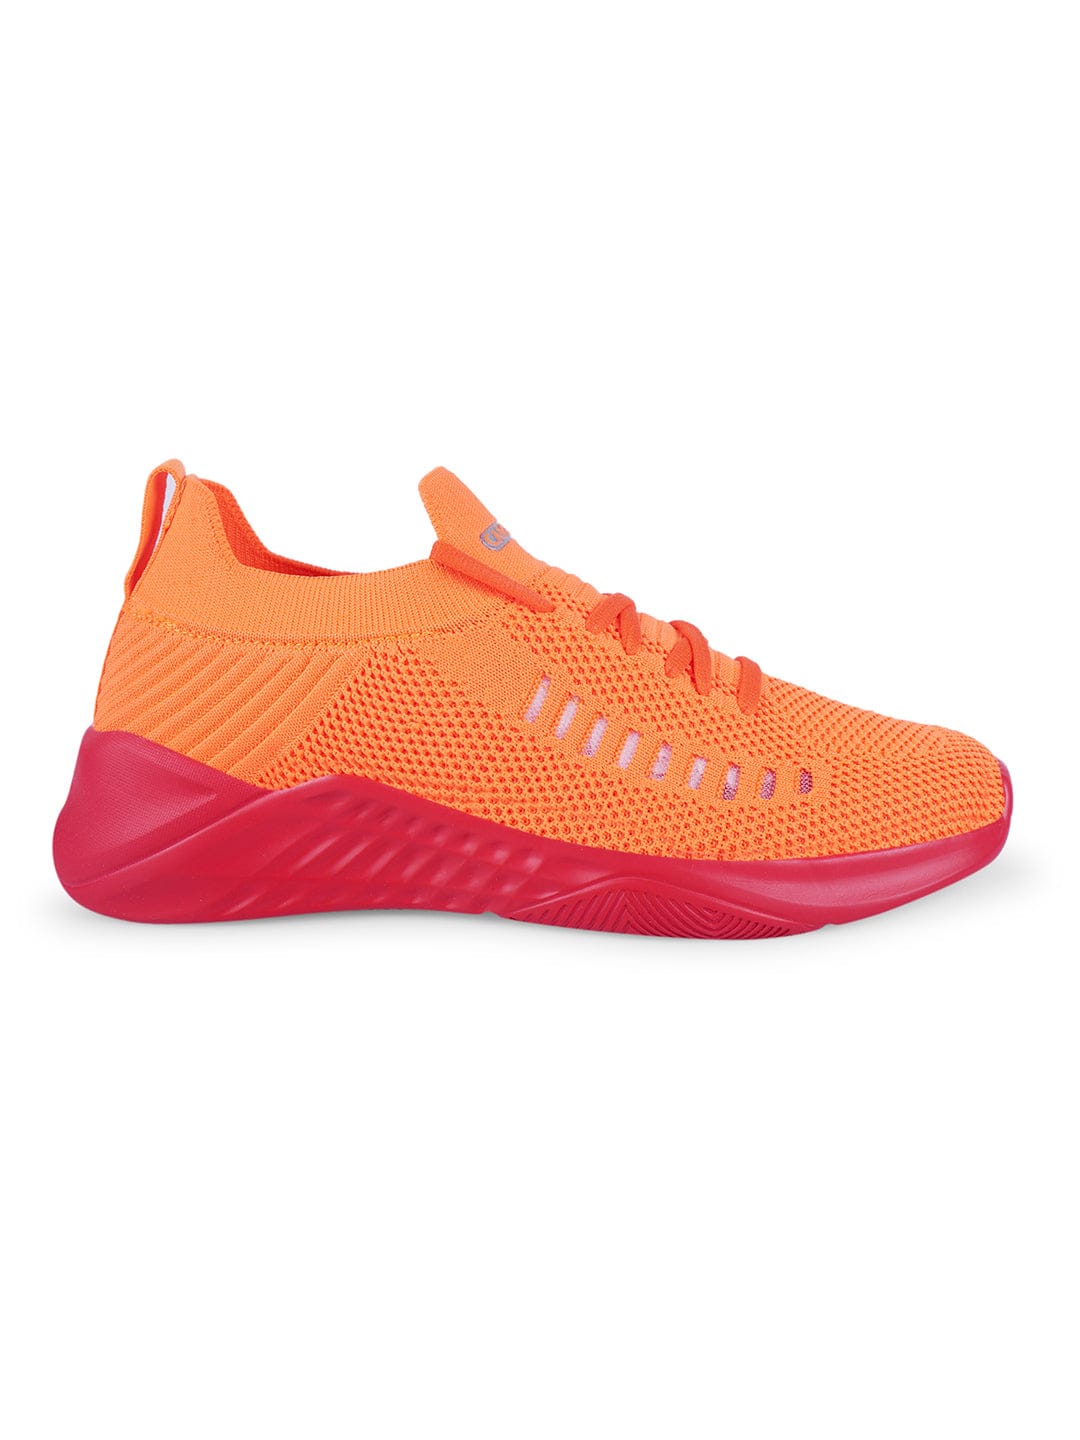 Men's FUJISPEED 2 | Bright Orange/Antique Red | Running Shoes | ASICS